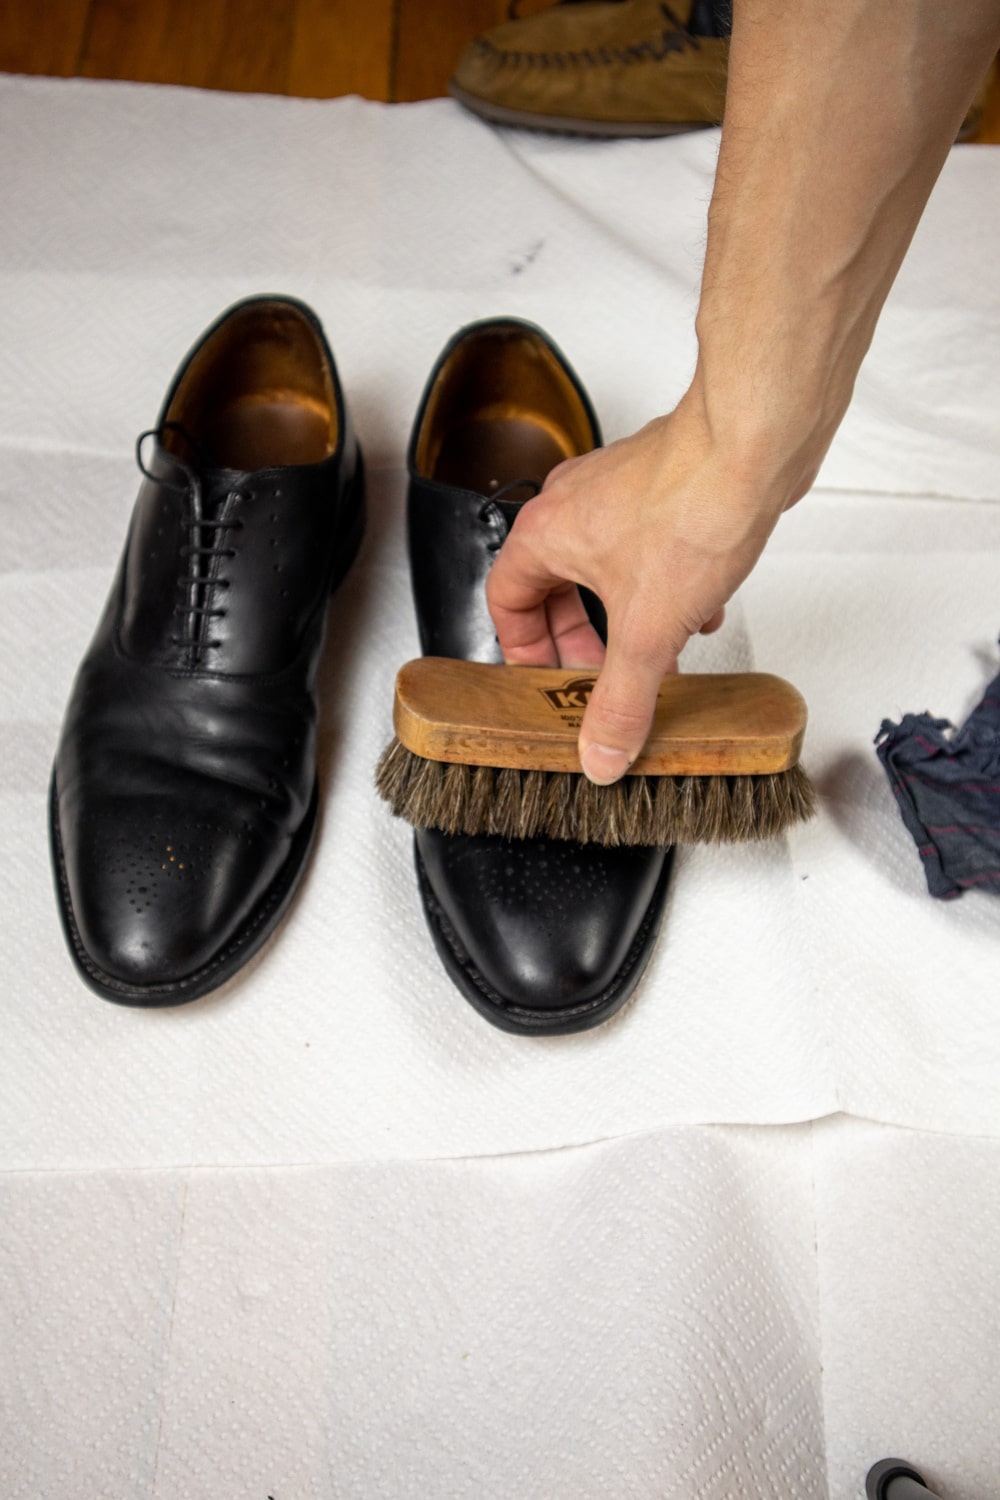 Brushing Black Dress Shoes